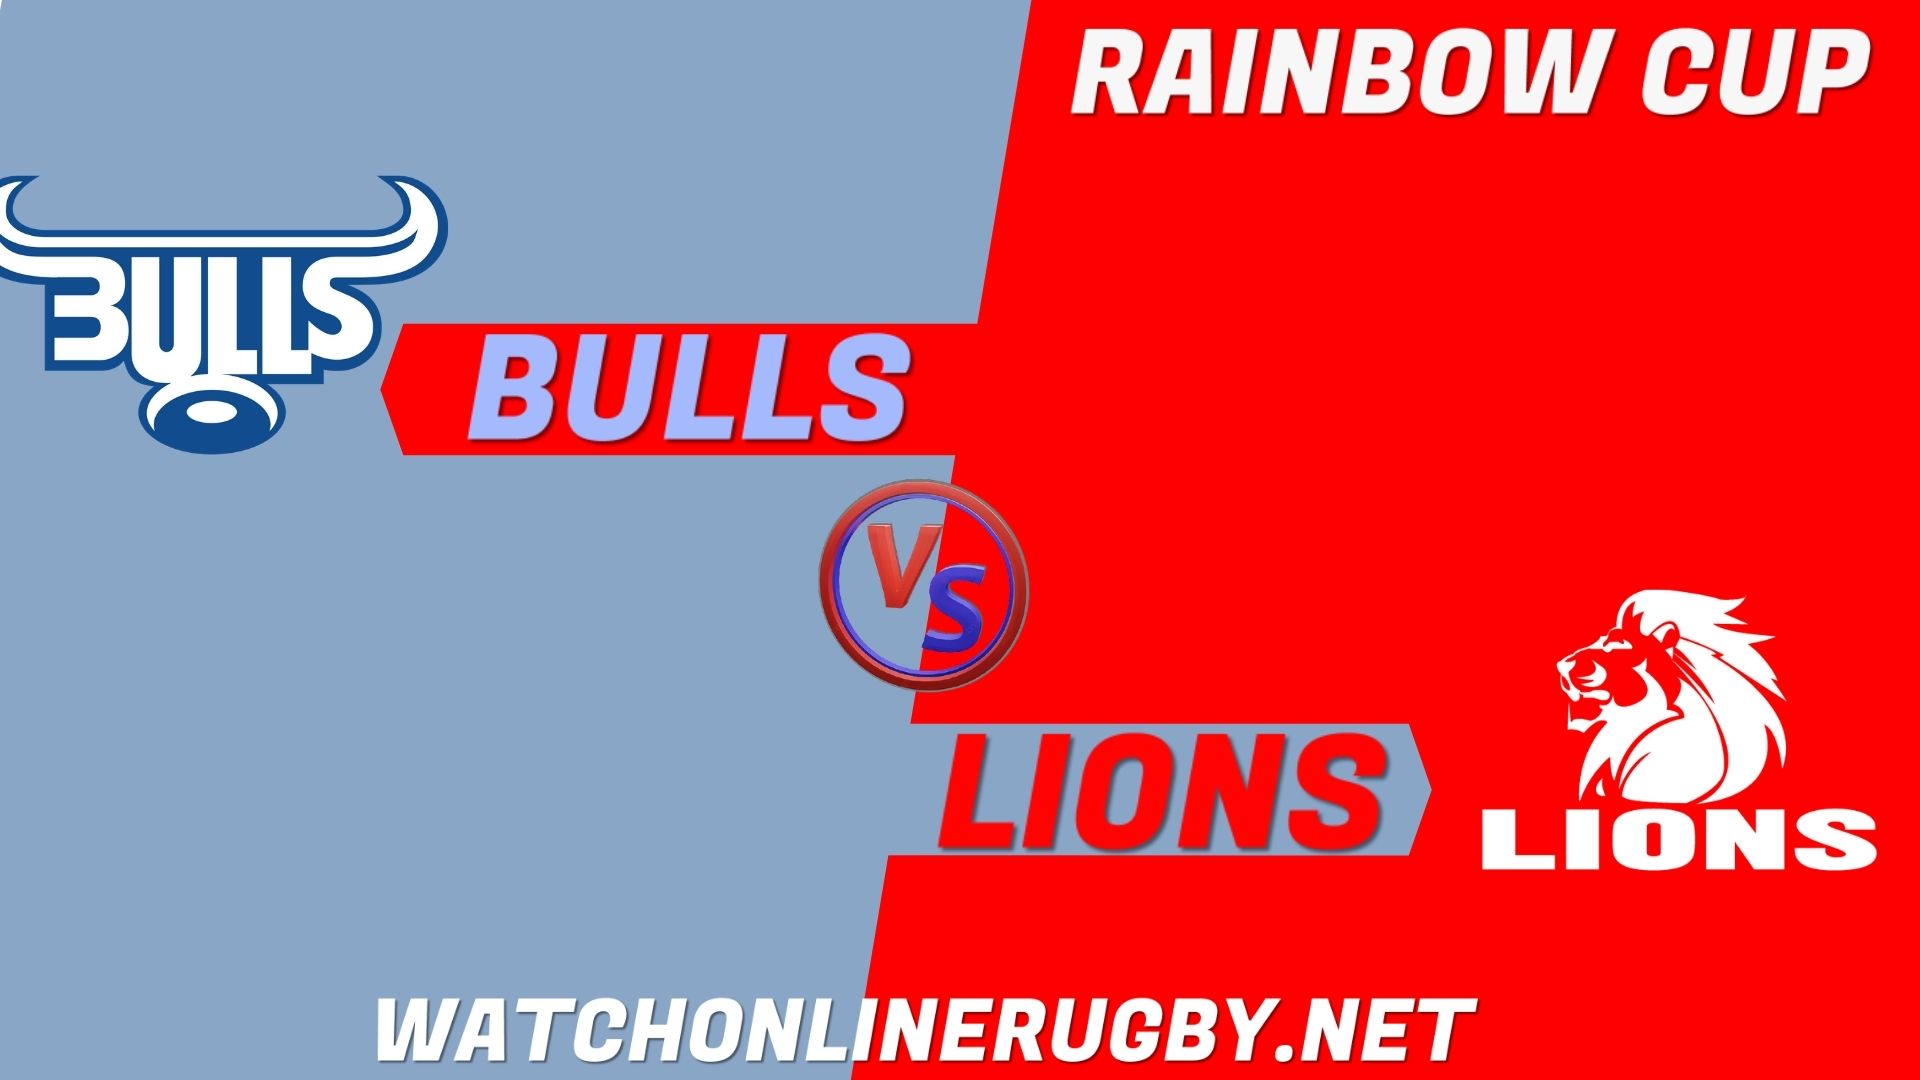 Blue Bulls Vs Lions Live Streaming